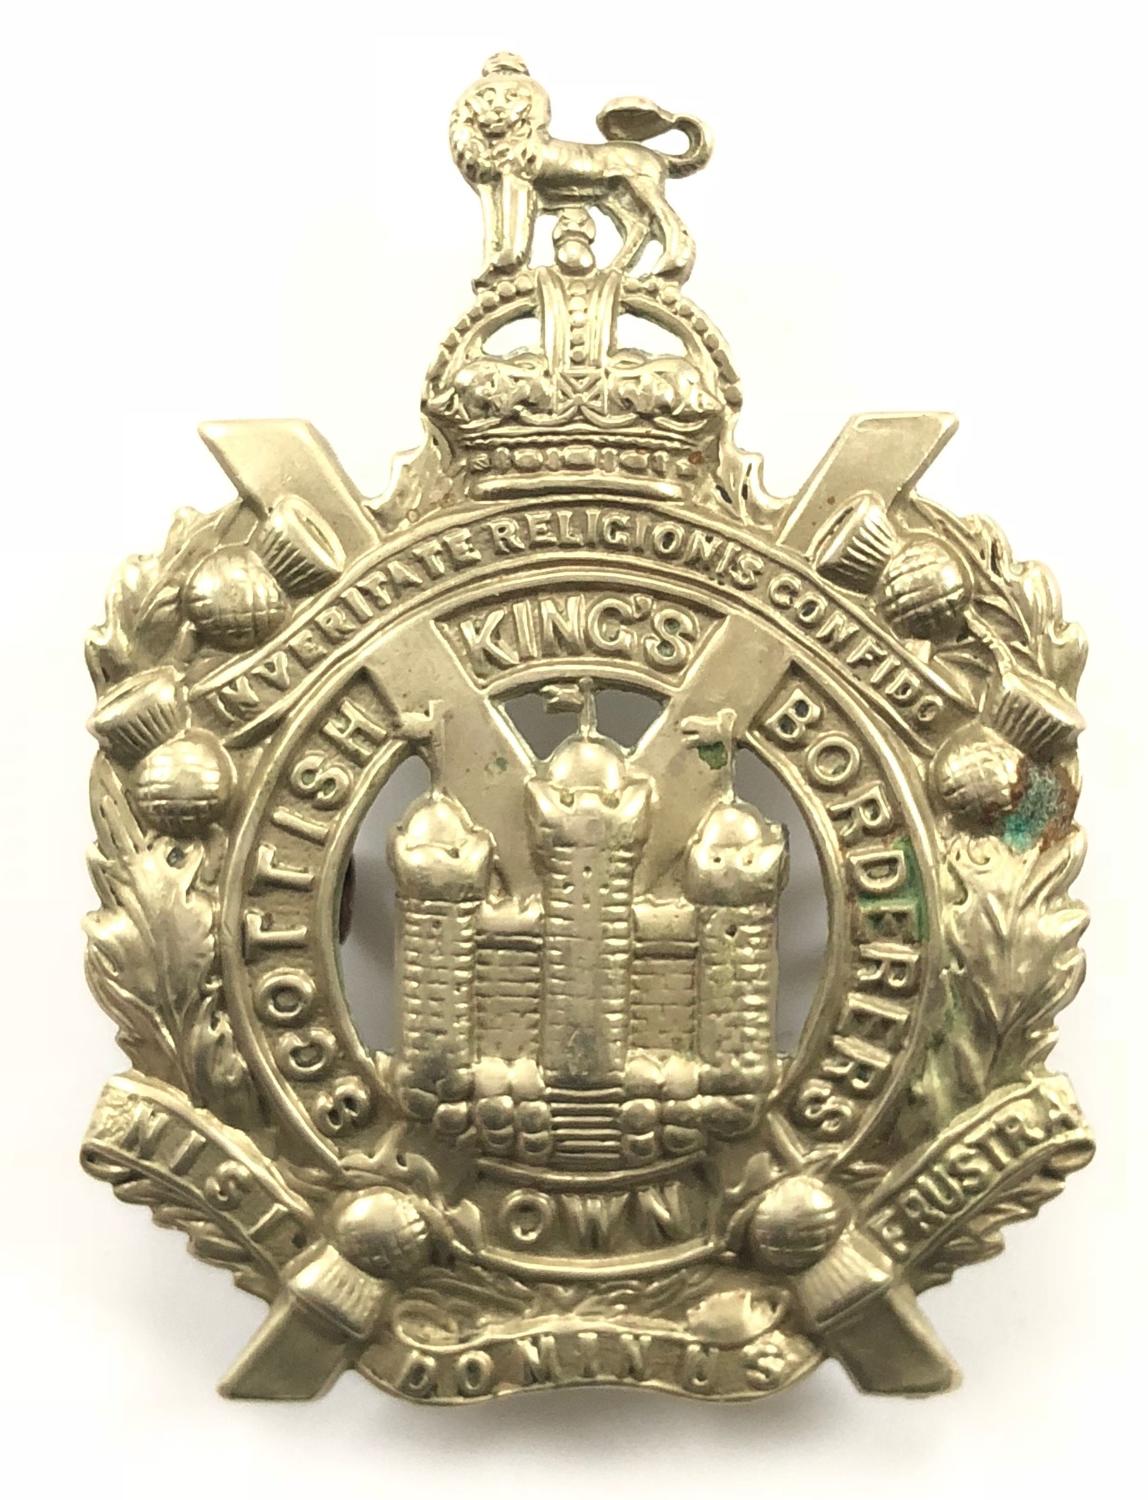 WW1 / WW2 King’s Own Scottish Borderers Cap Badge.